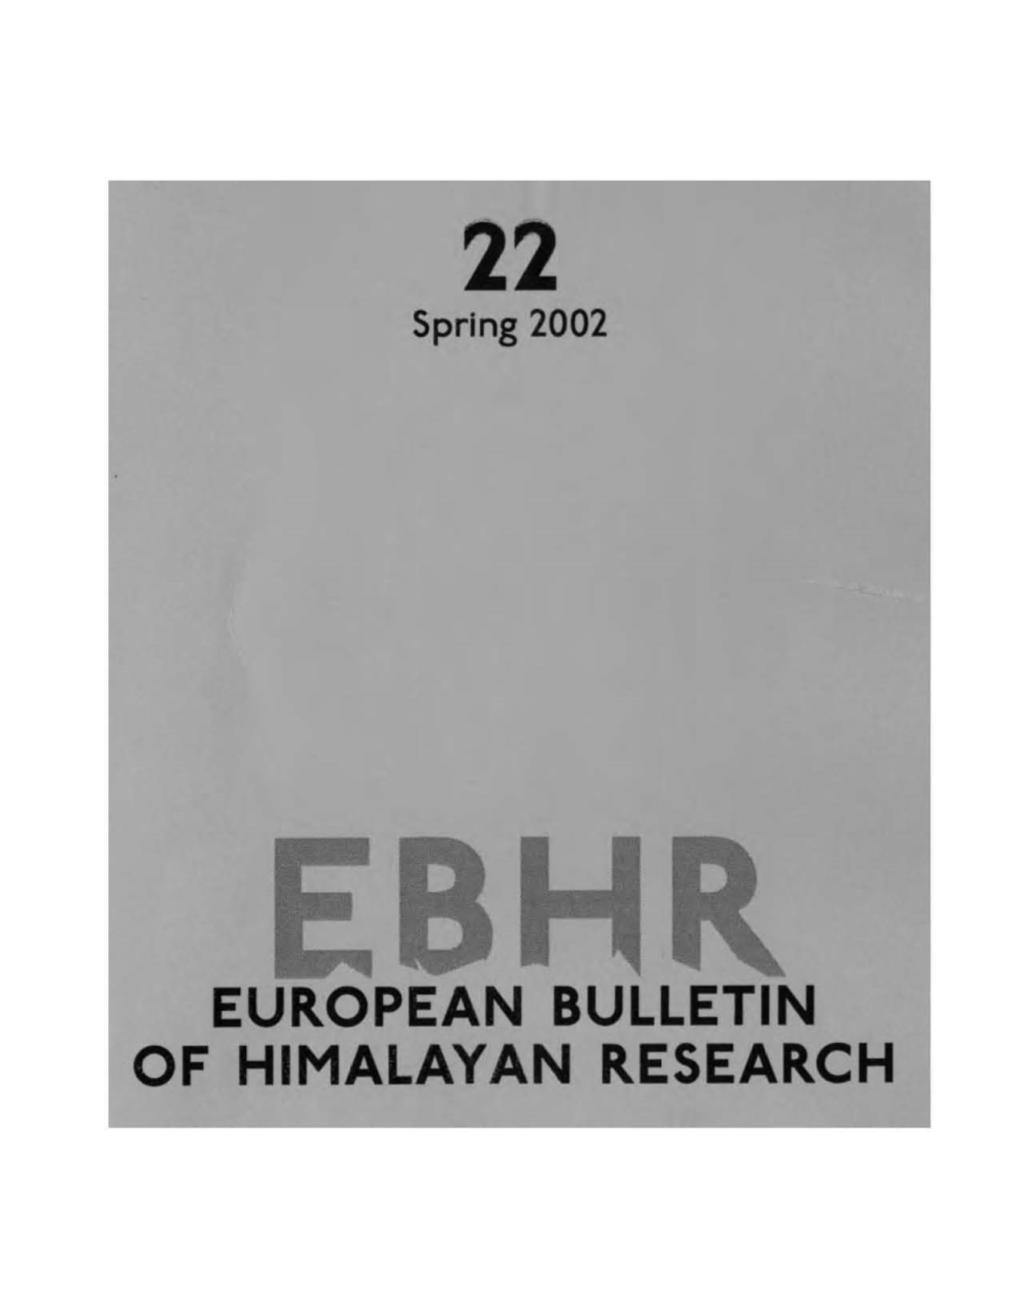 European Bulletin of Himalayan Research (EBHR)